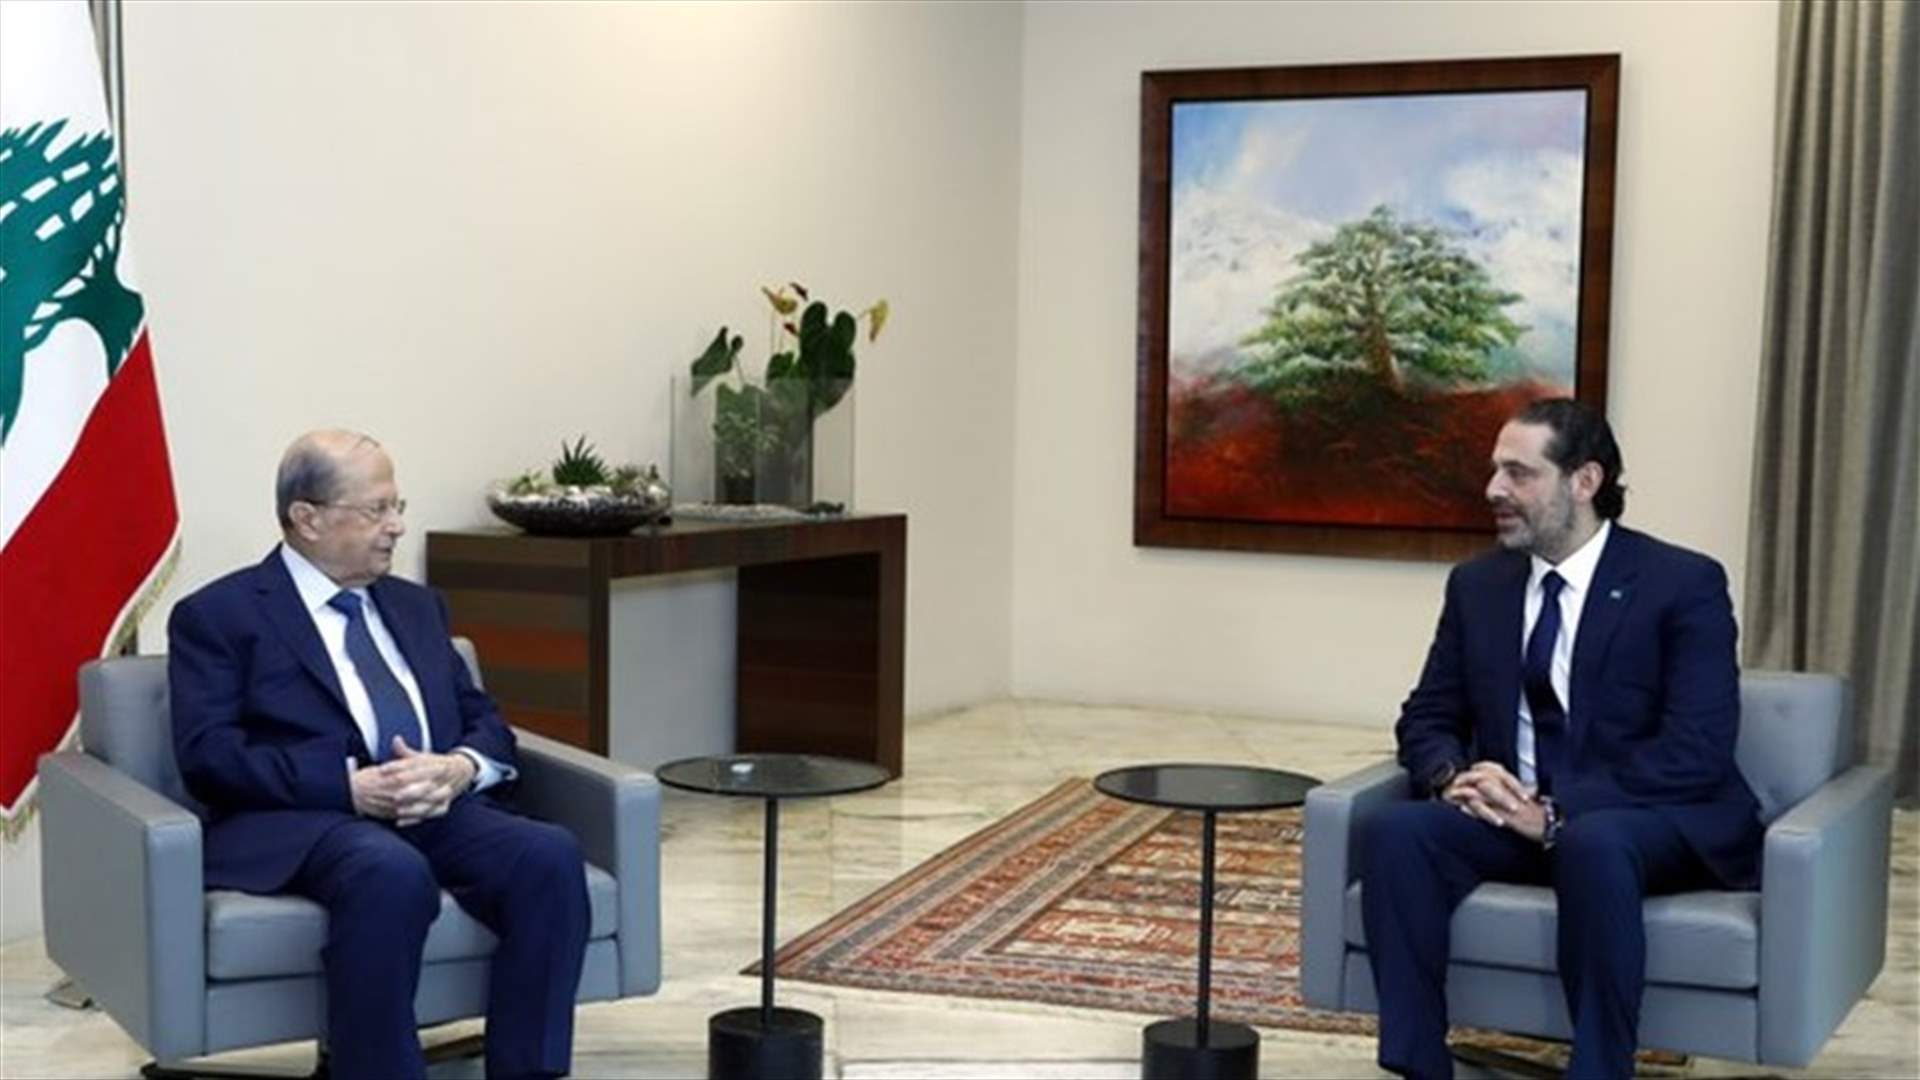 President Aoun meets with PM-designate Hariri: Atmosphere positive